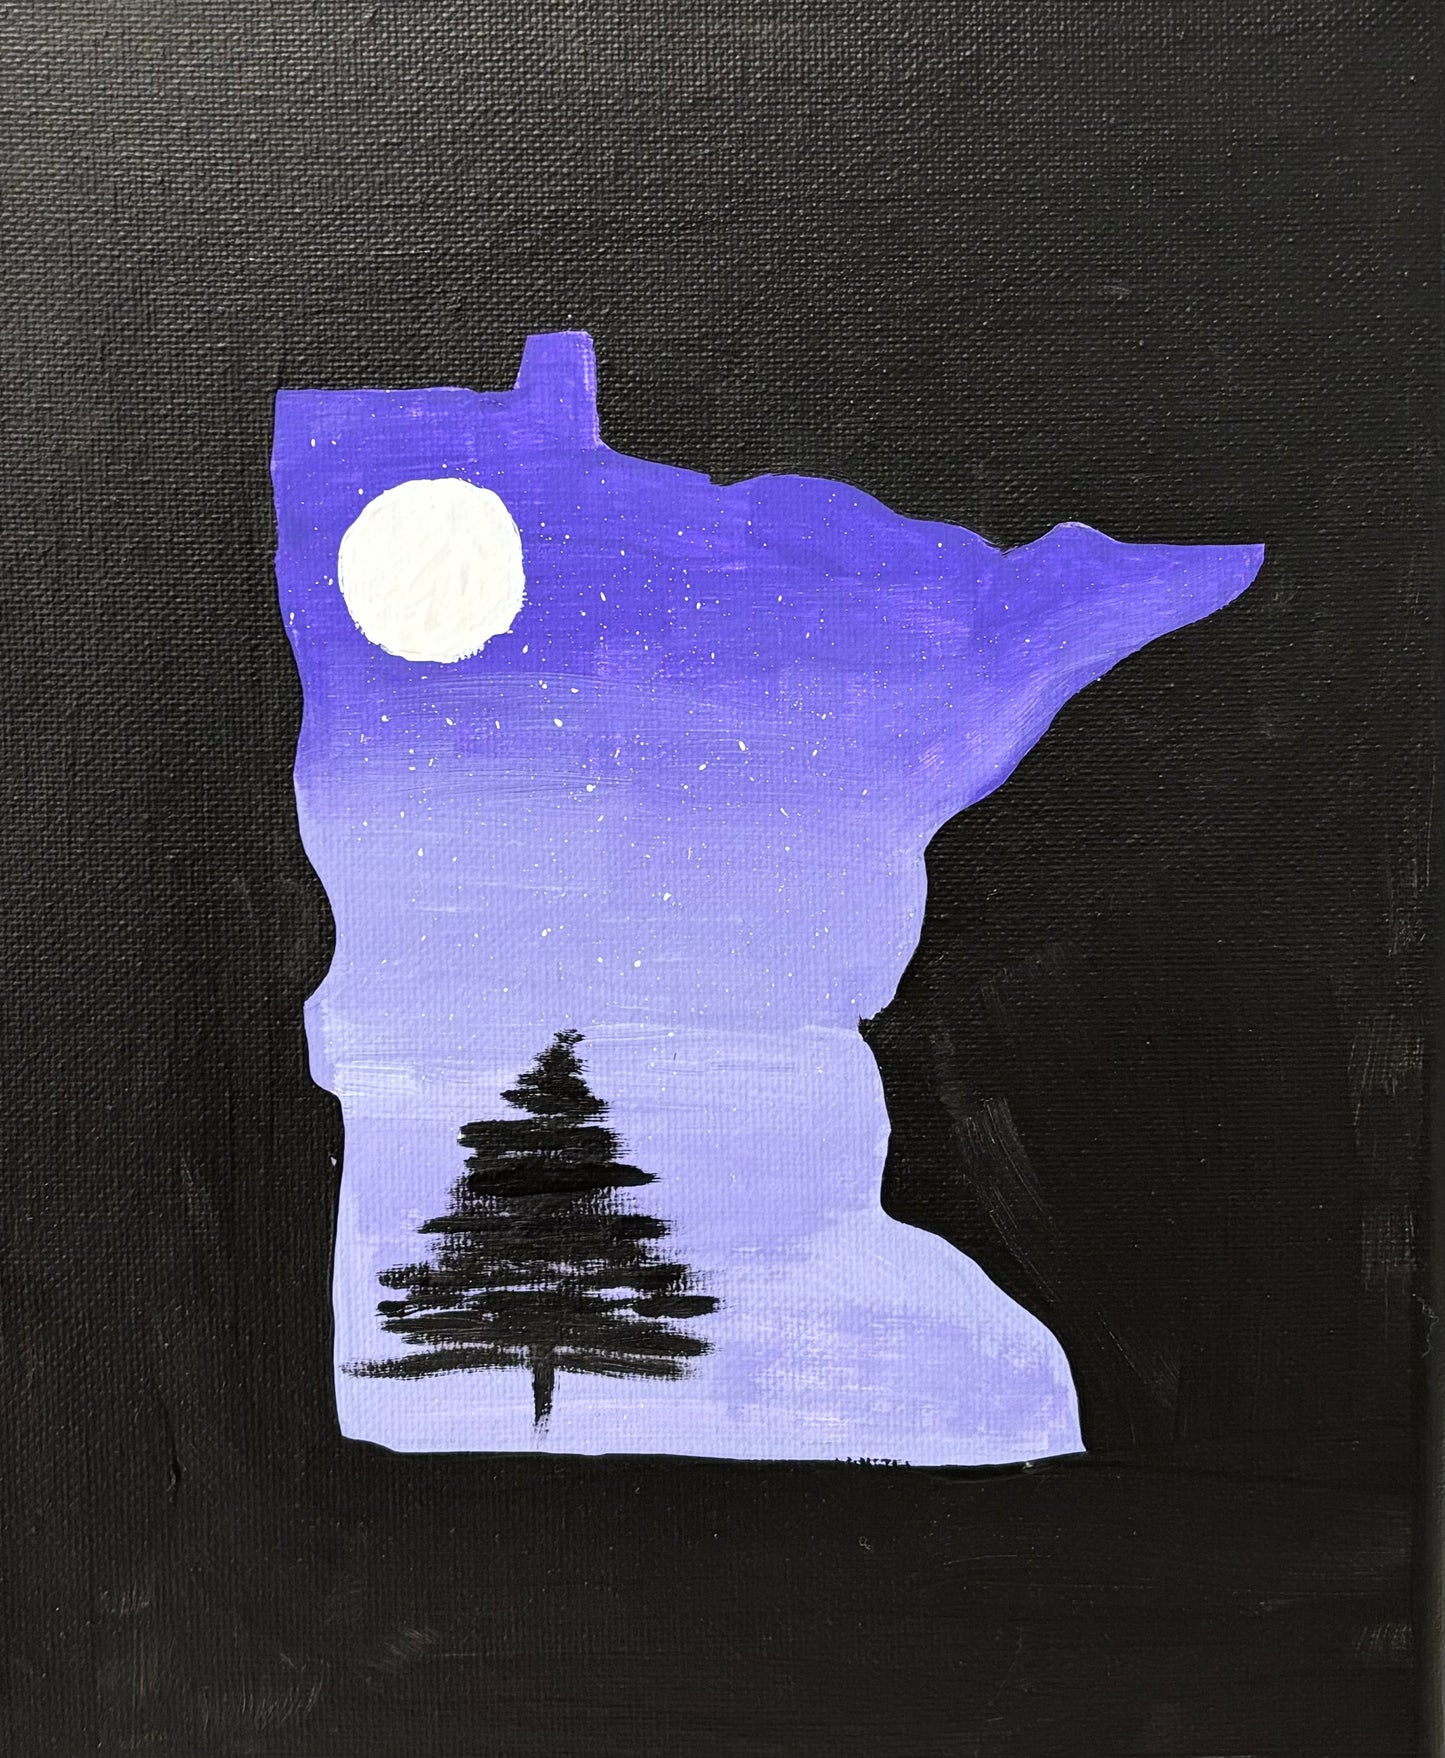 Minnesota Painting Class | Art-A-Whirl | Fri. May 17th 12pm-8pm | Self Guided